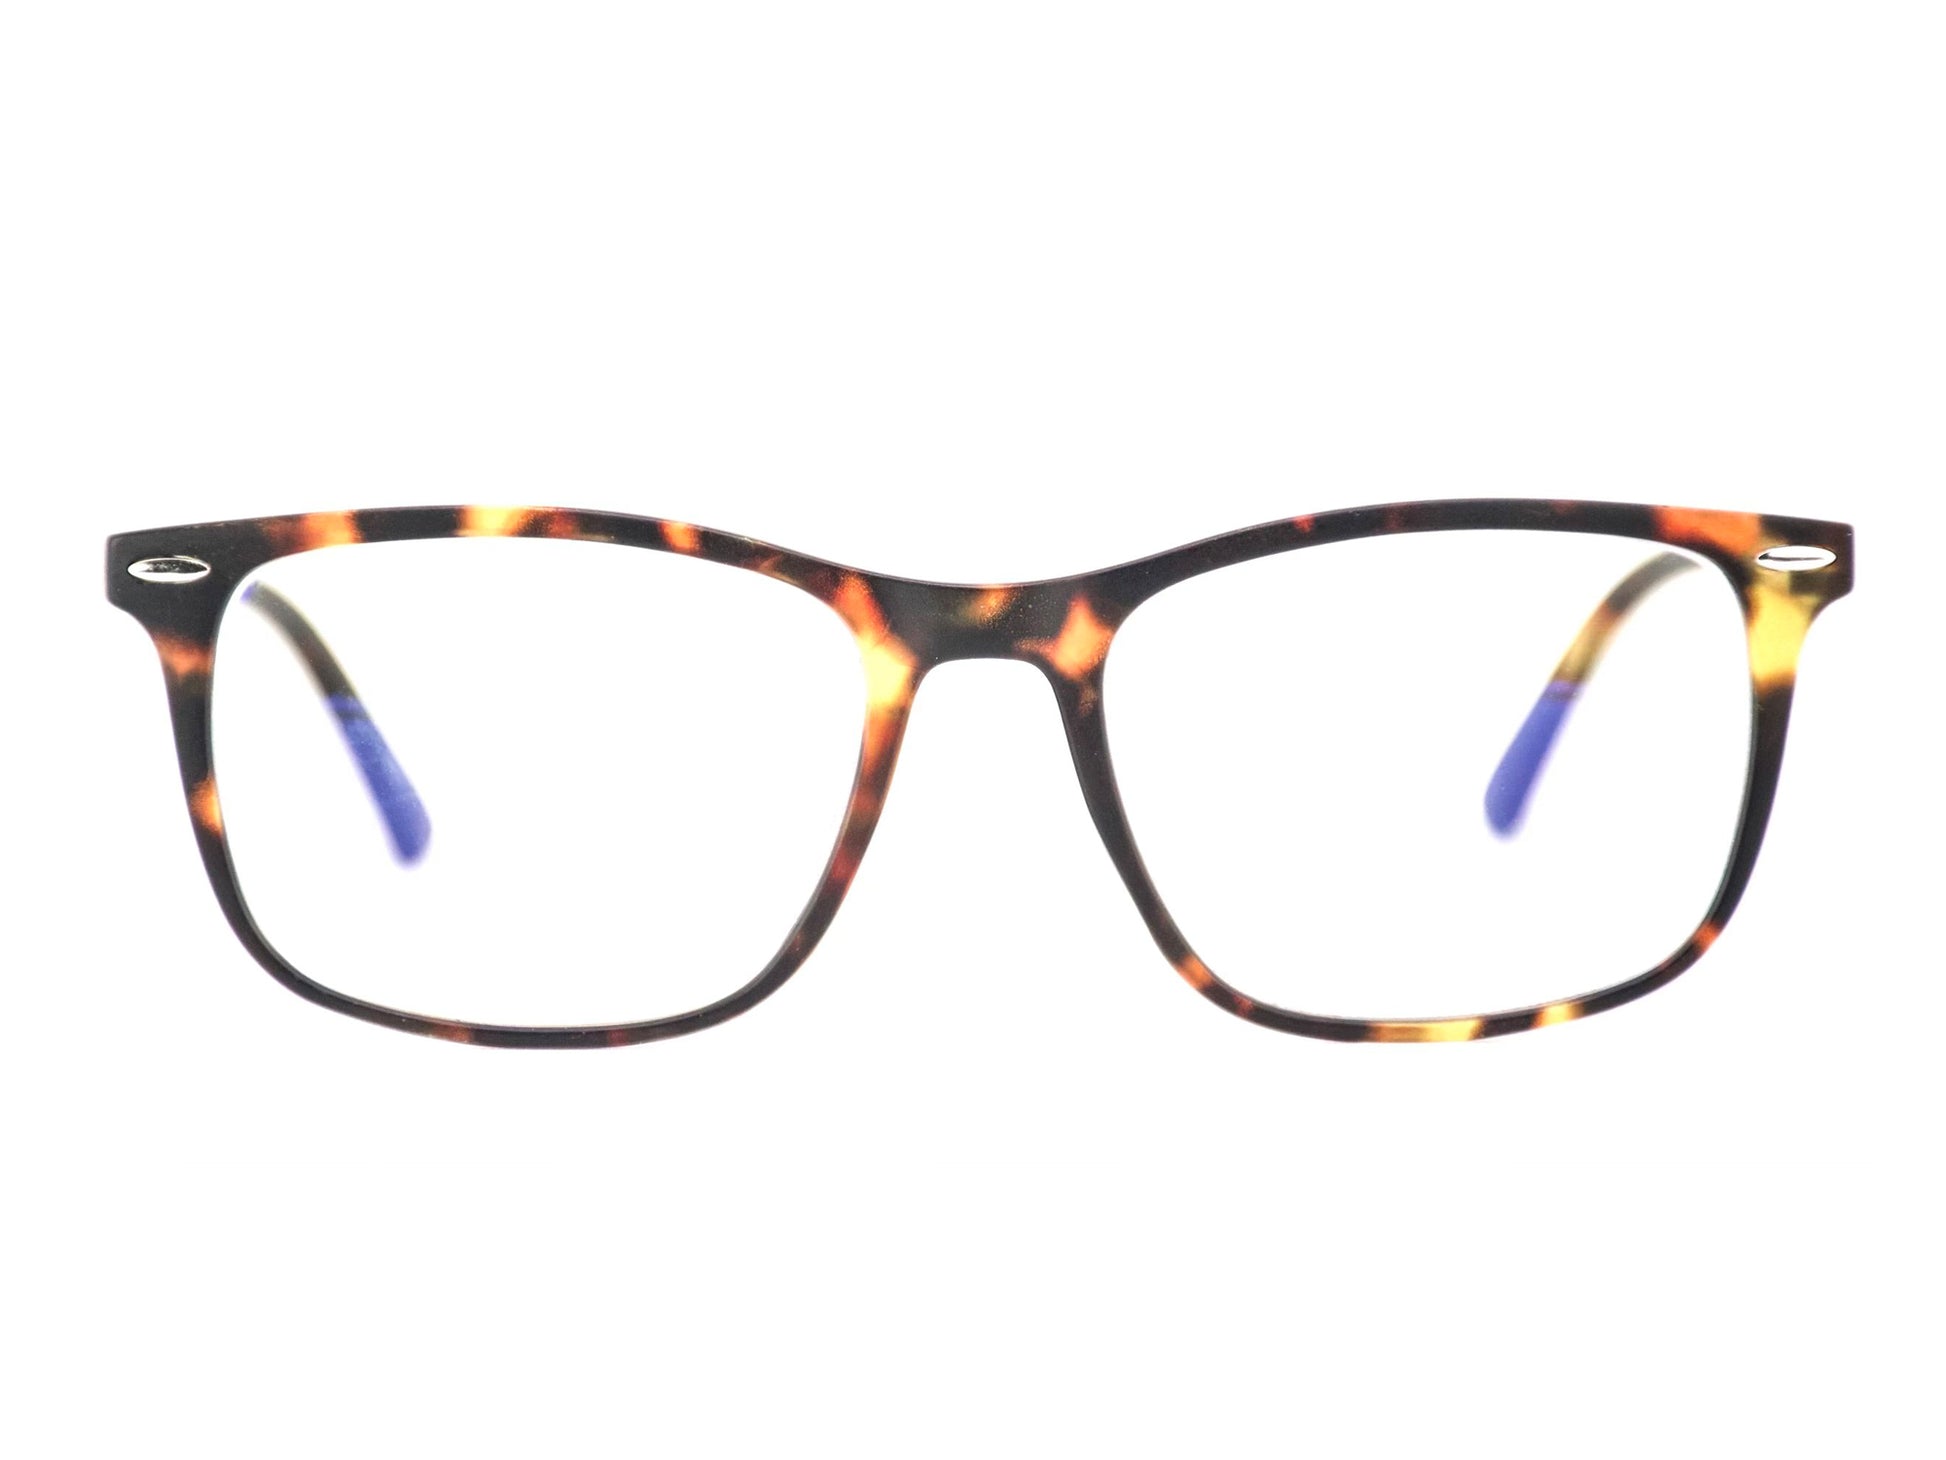 Sonoma men's fashionable brown demi professional blue light blocking frames and glasses.  